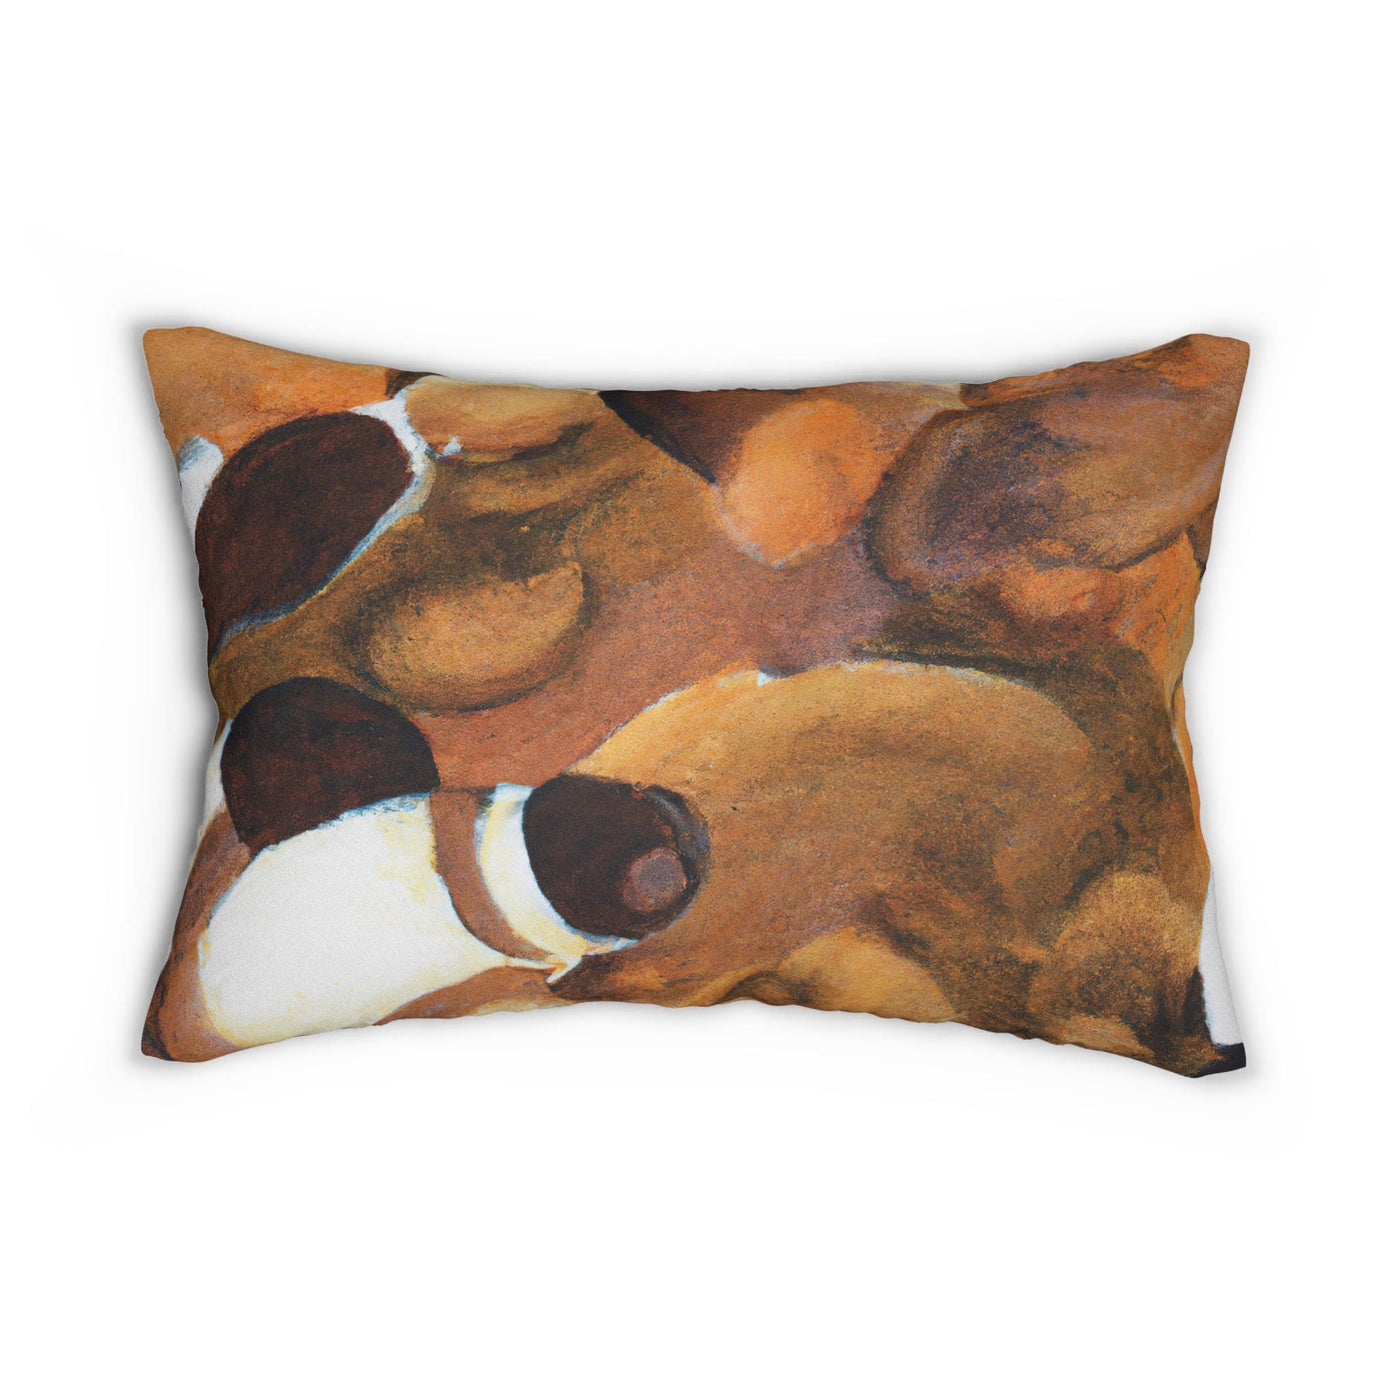 Decorative Lumbar Throw Pillow - Brown White Stone Pattern - Decorative | Throw